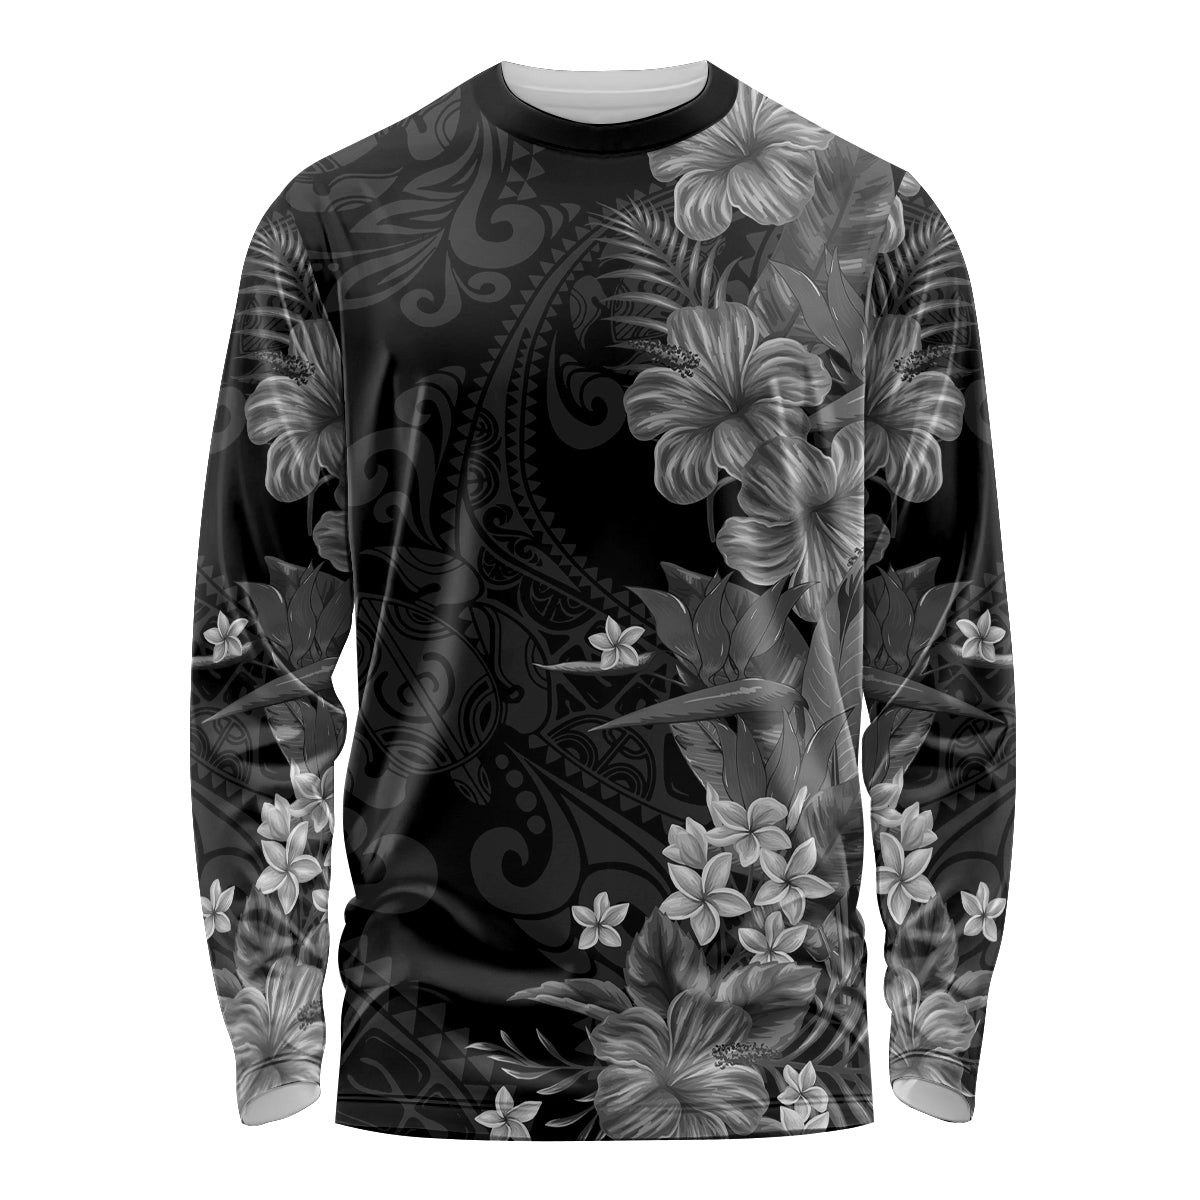 Hawaii Tropical Flowers Tribal Pattern Long Sleeve Shirt Black Style LT9 Unisex Black - Polynesian Pride